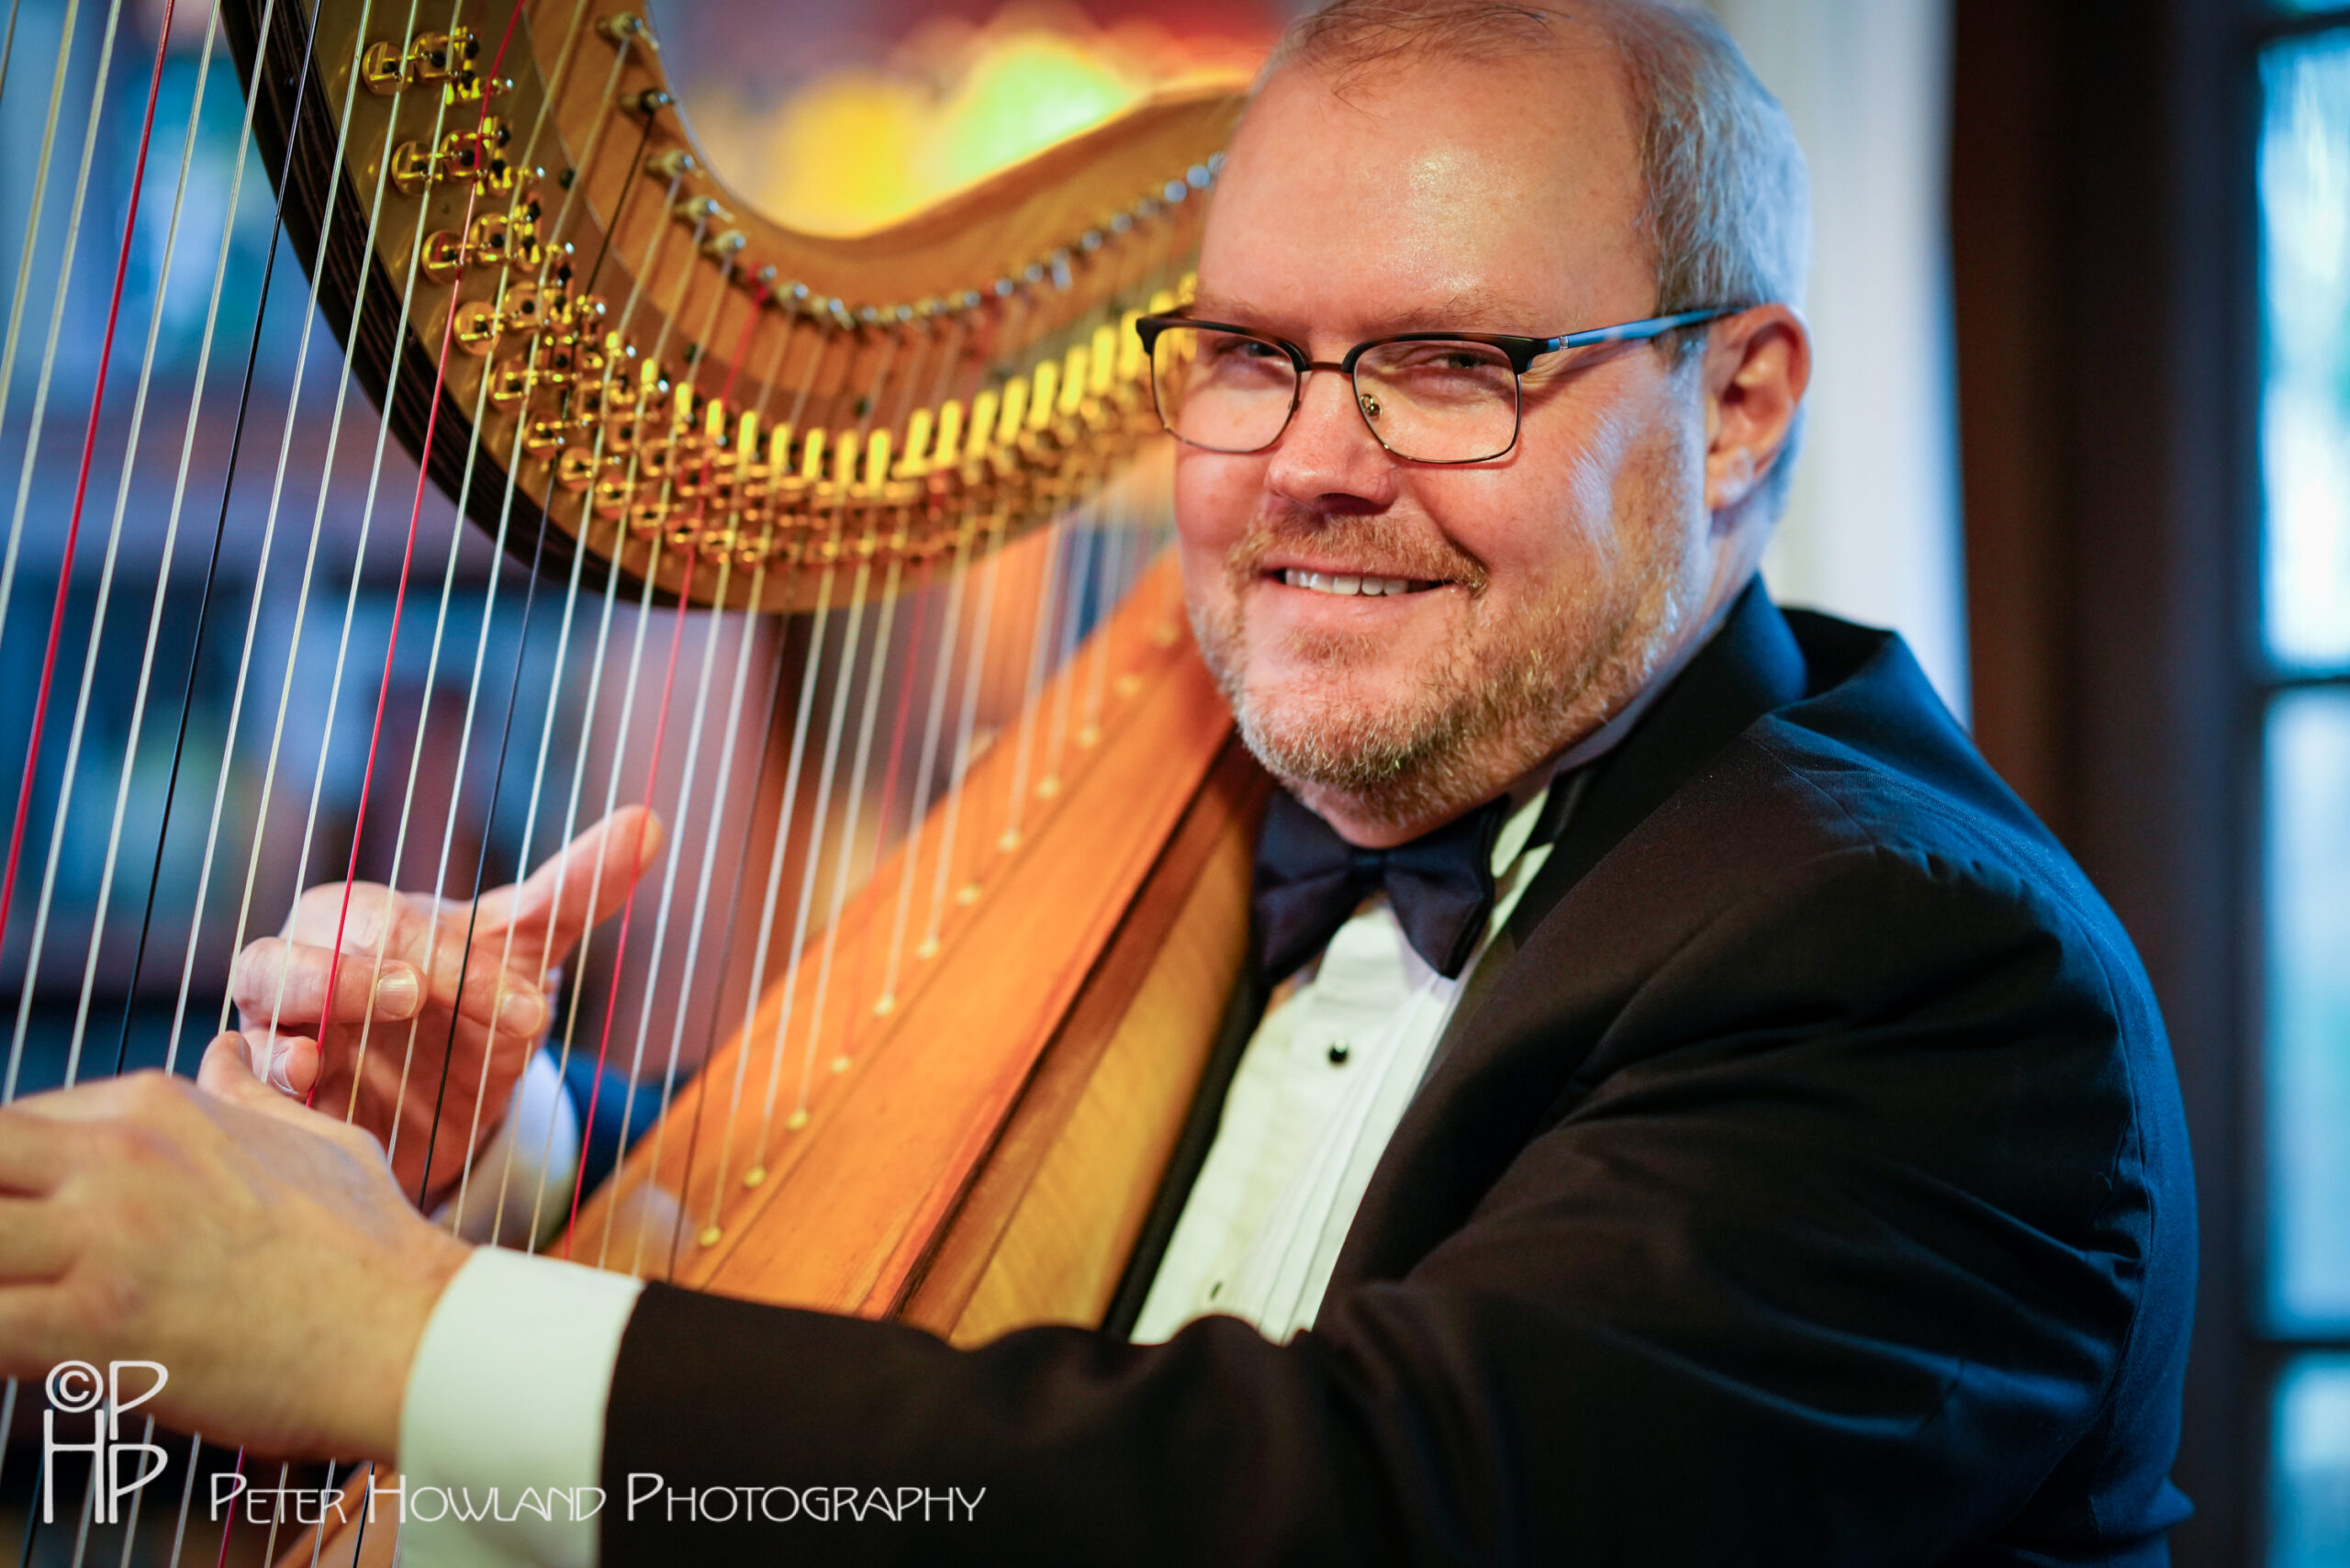 John Carringotn, a white middle aged man, plays the harp